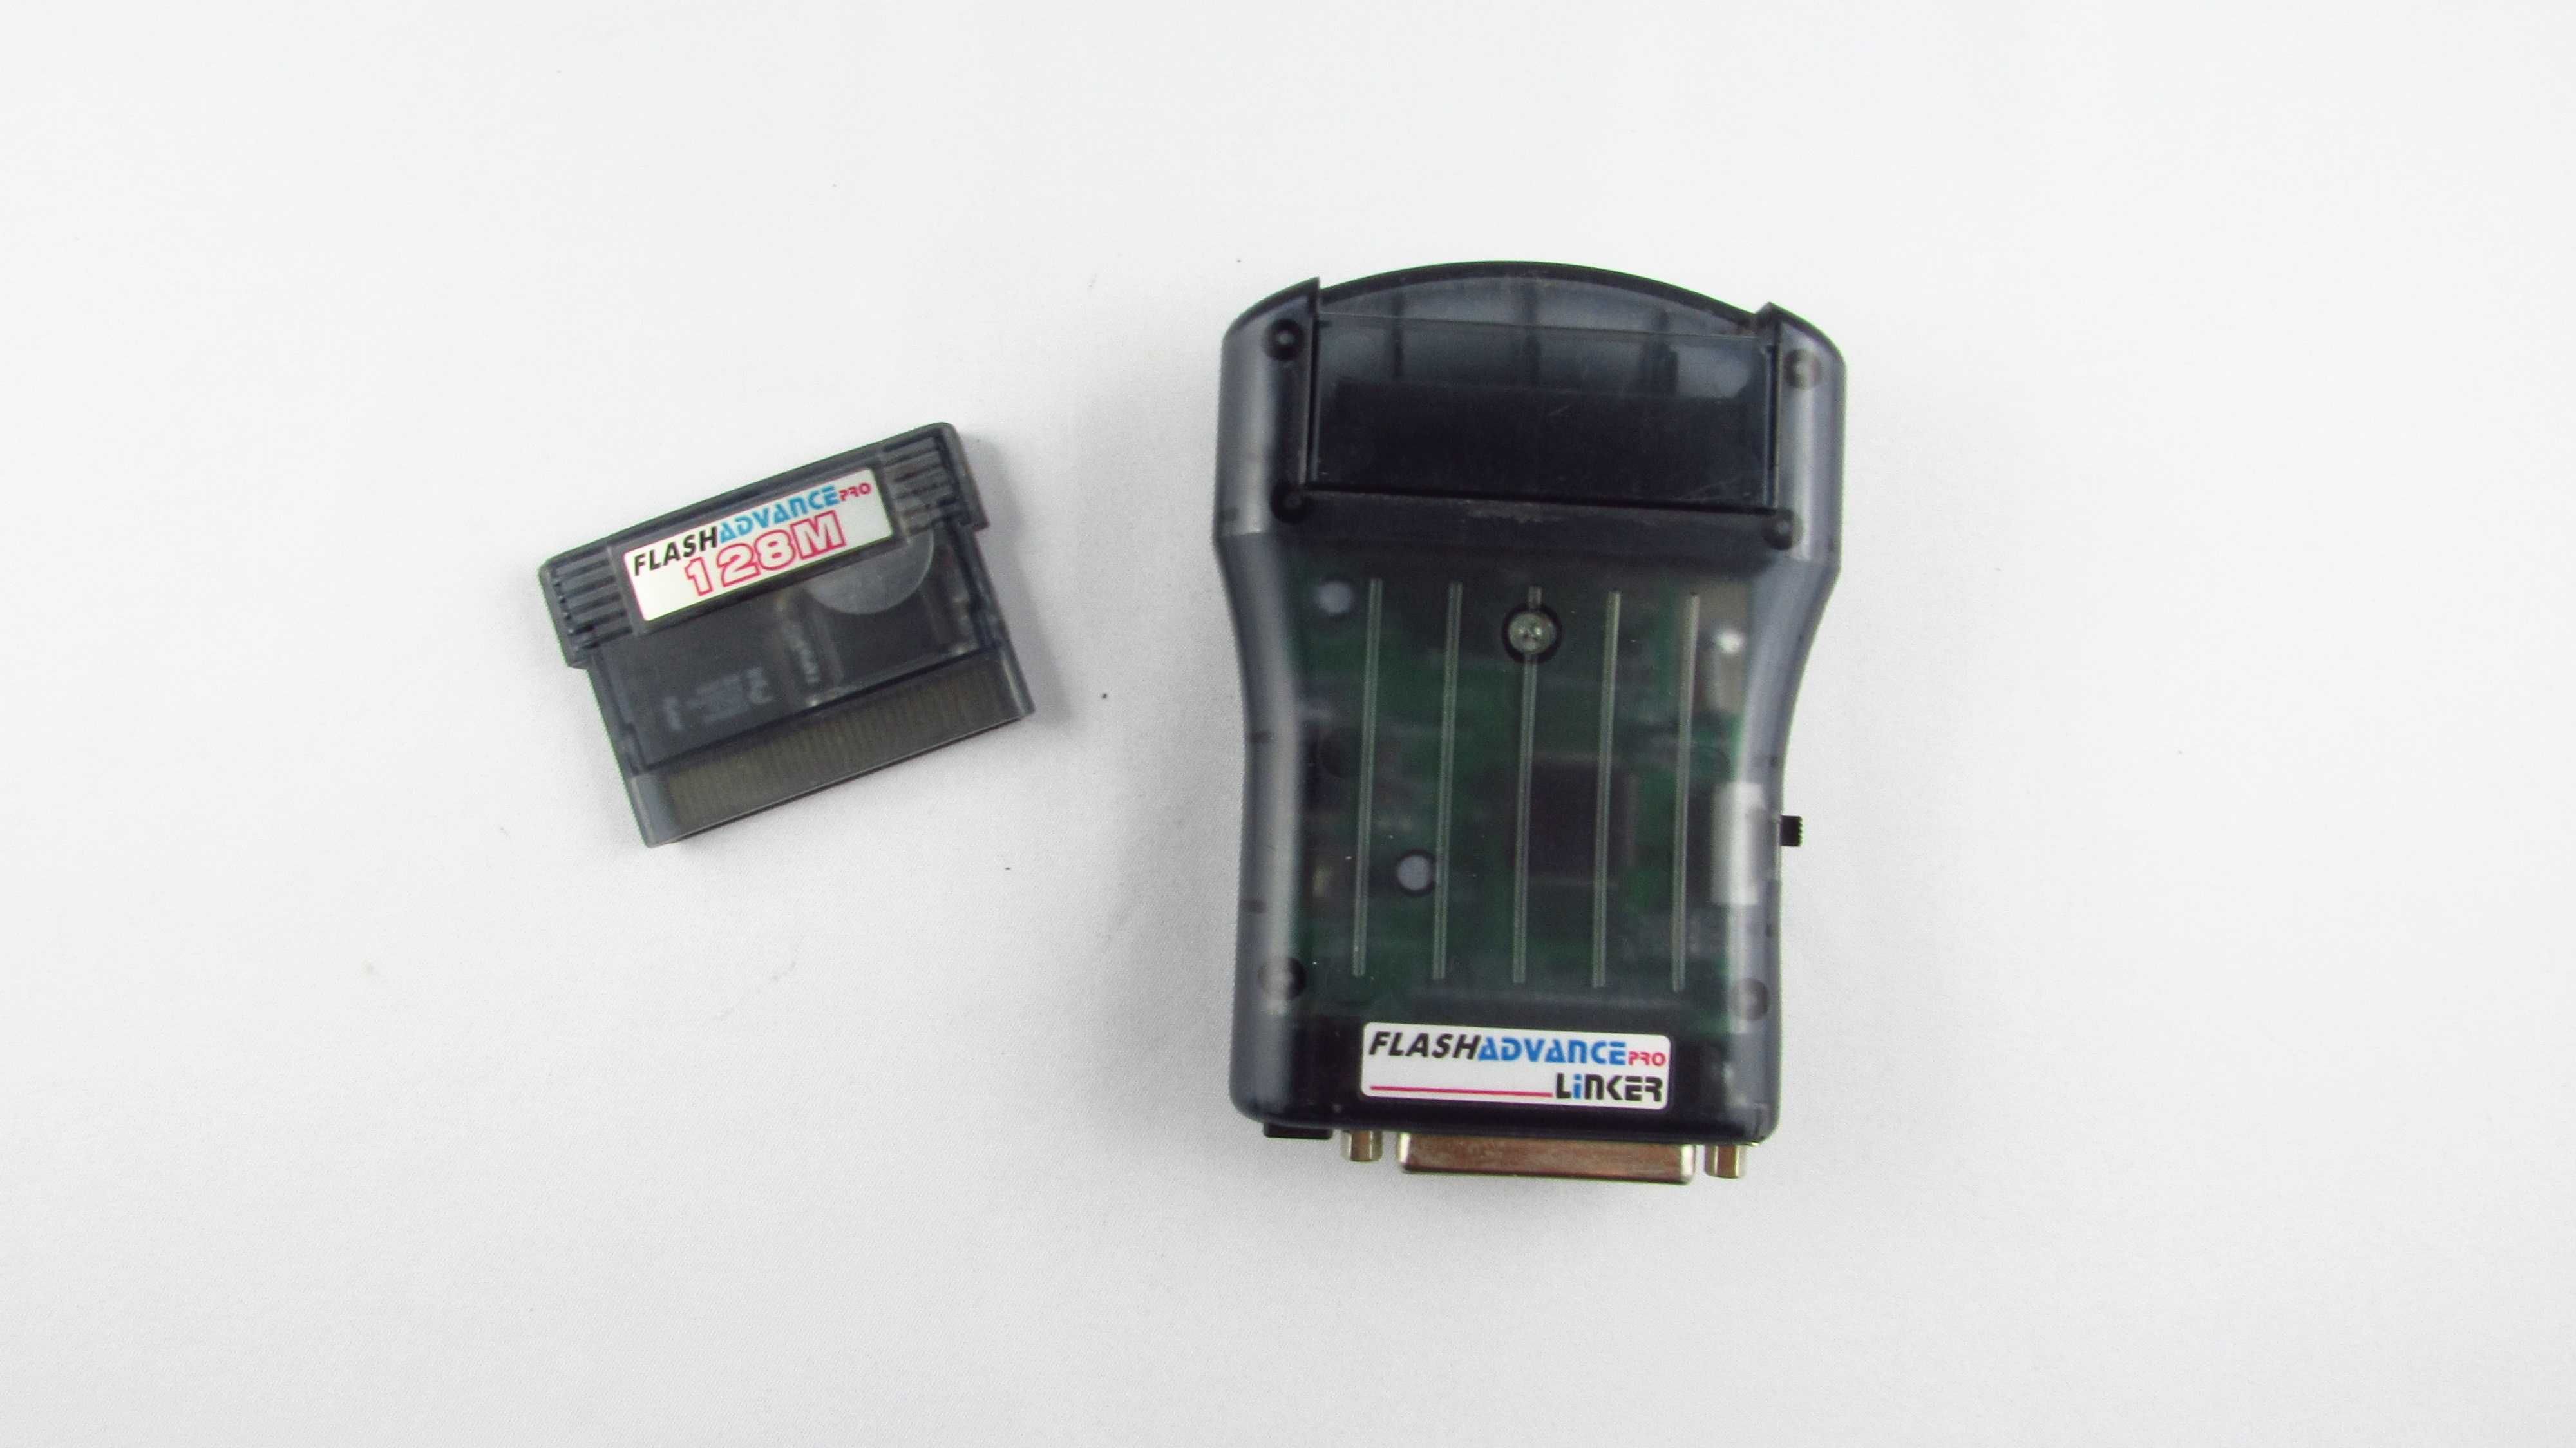 LINKER - Flash Advance Pro 128 M - Zestaw do nagrywania Gier GameBoy